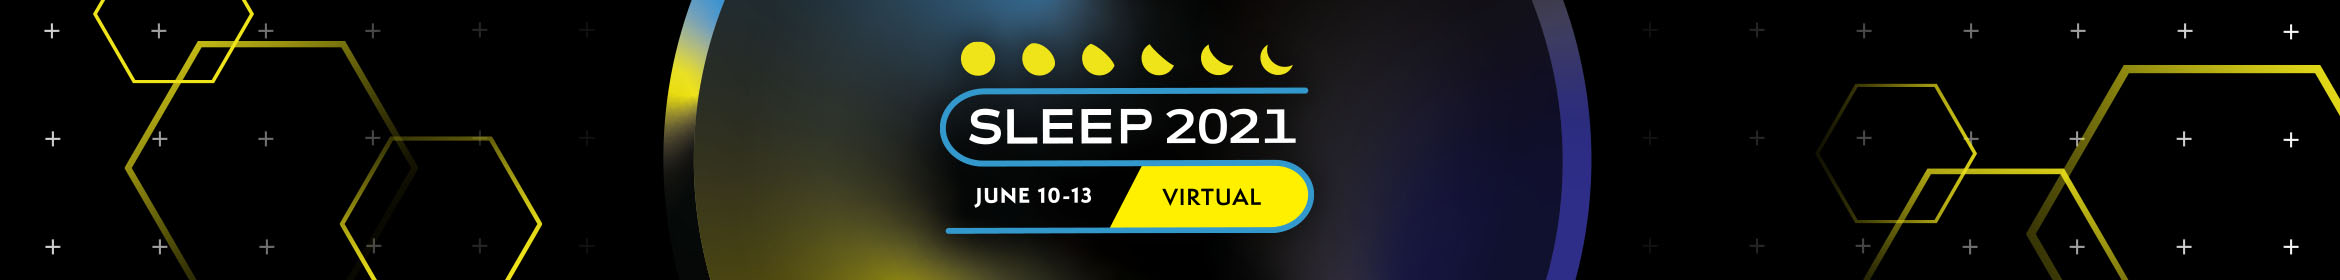 SLEEP 2021 Main banner